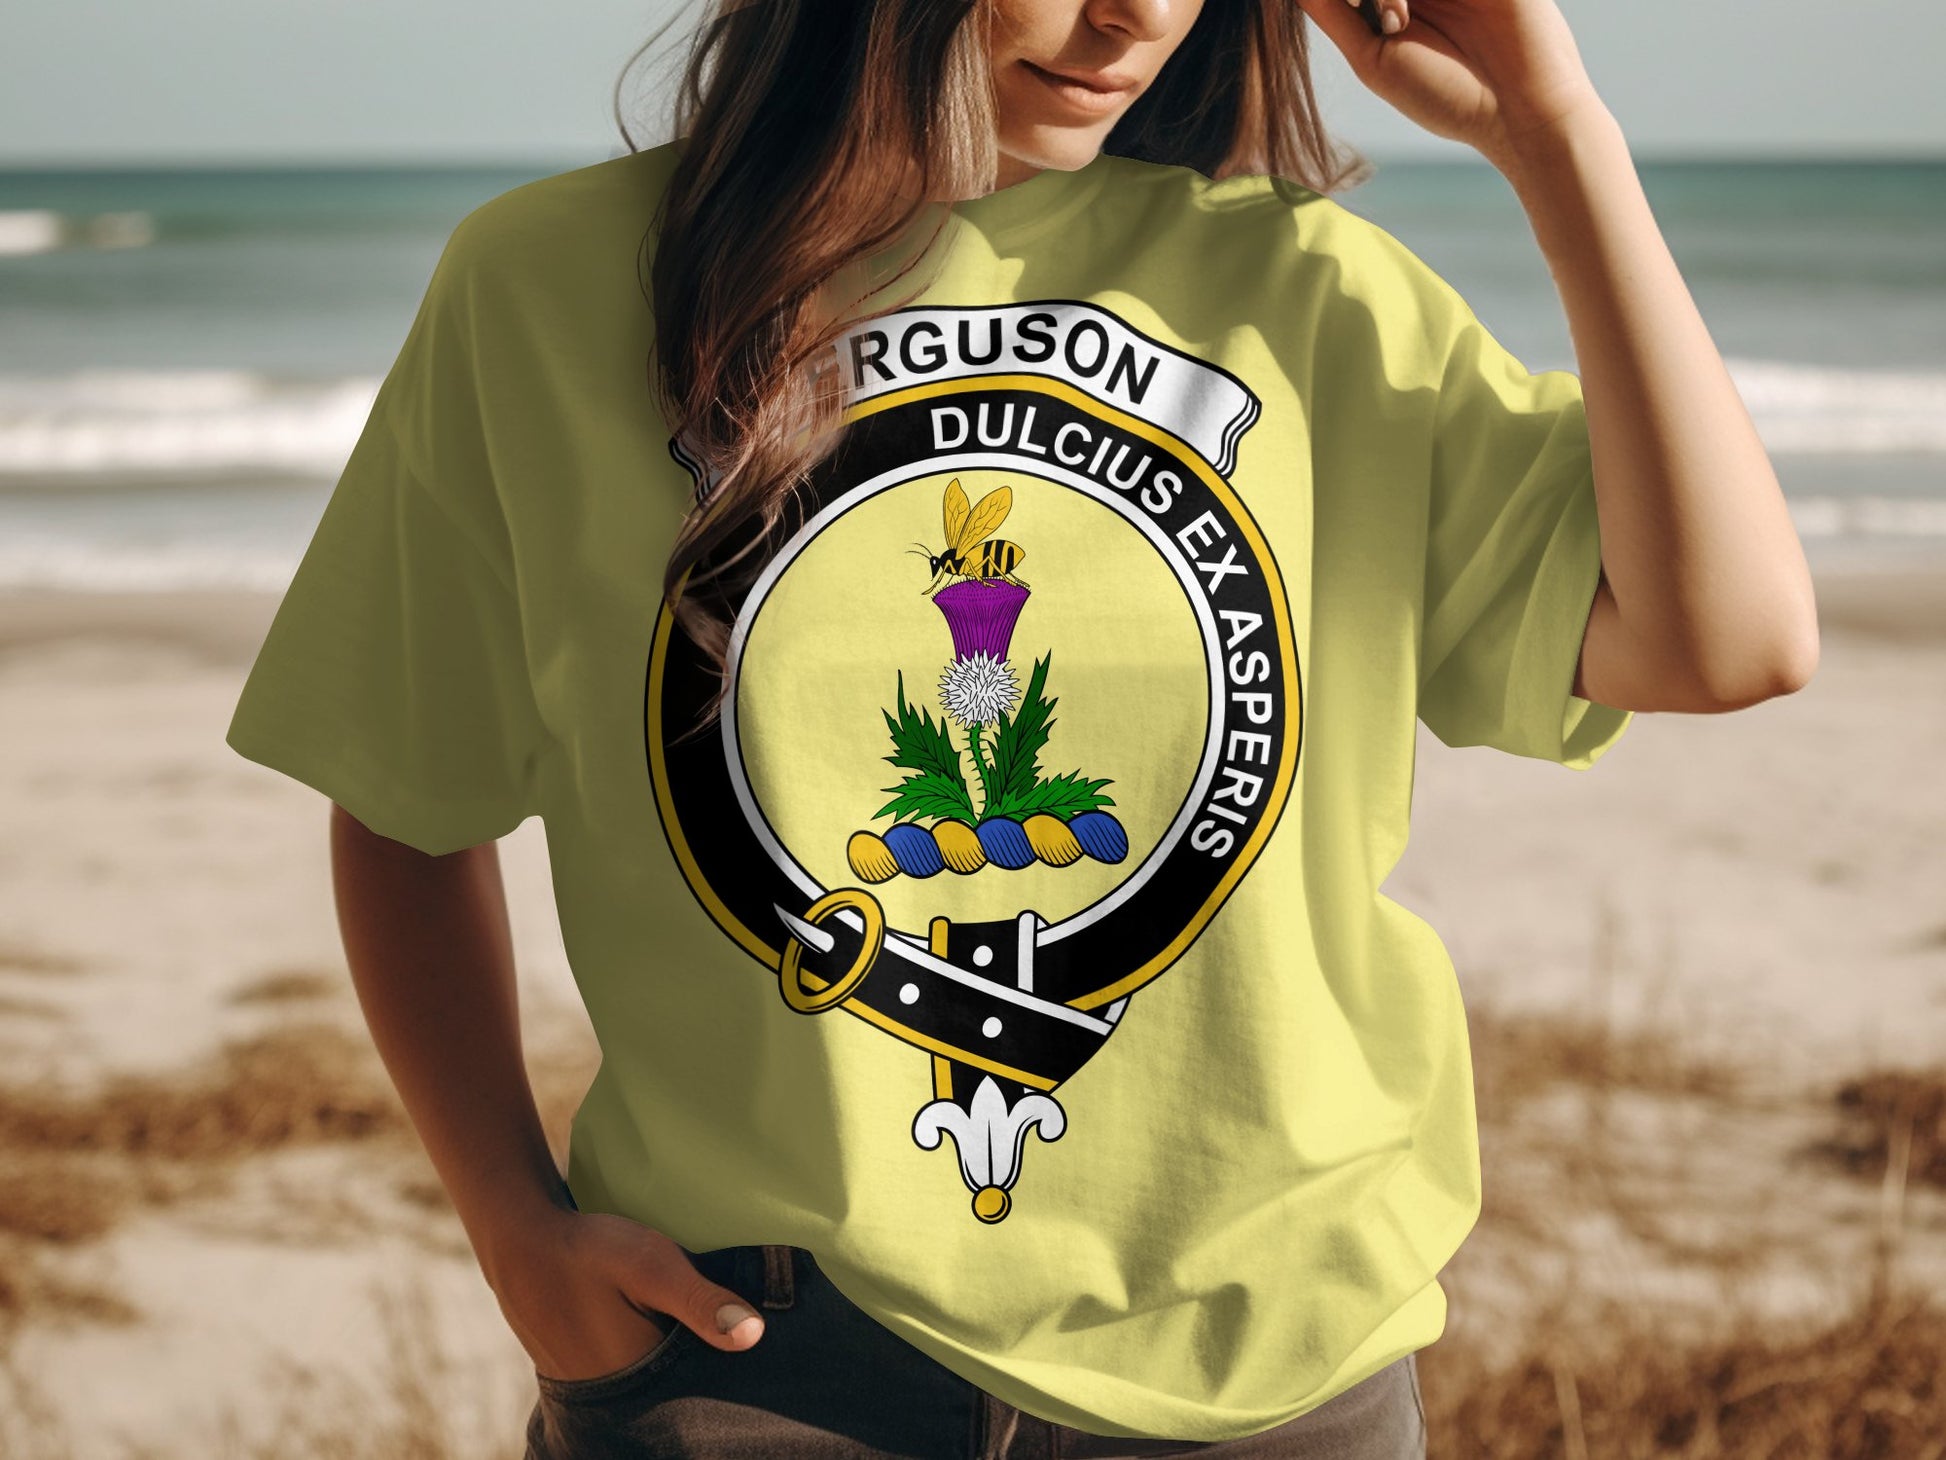 Ferguson Scottish Clan Crest Highland Games T-Shirt - Living Stone Gifts